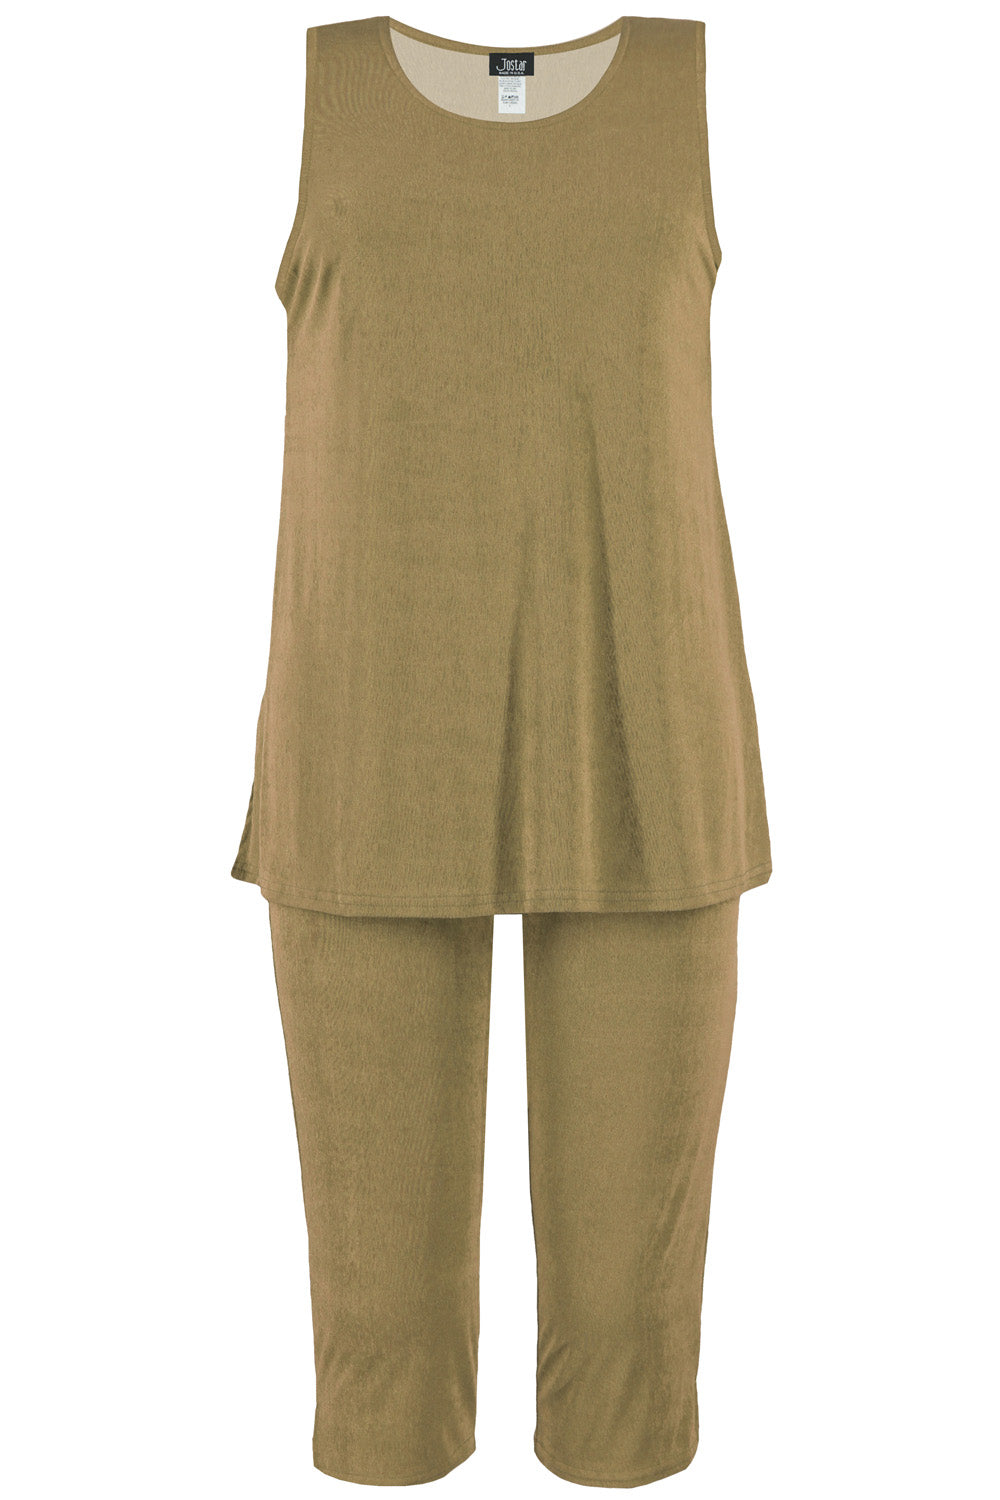 Jostar Women's Stretchy Tank Capri Pant Set, 902BN-T - Jostar Online